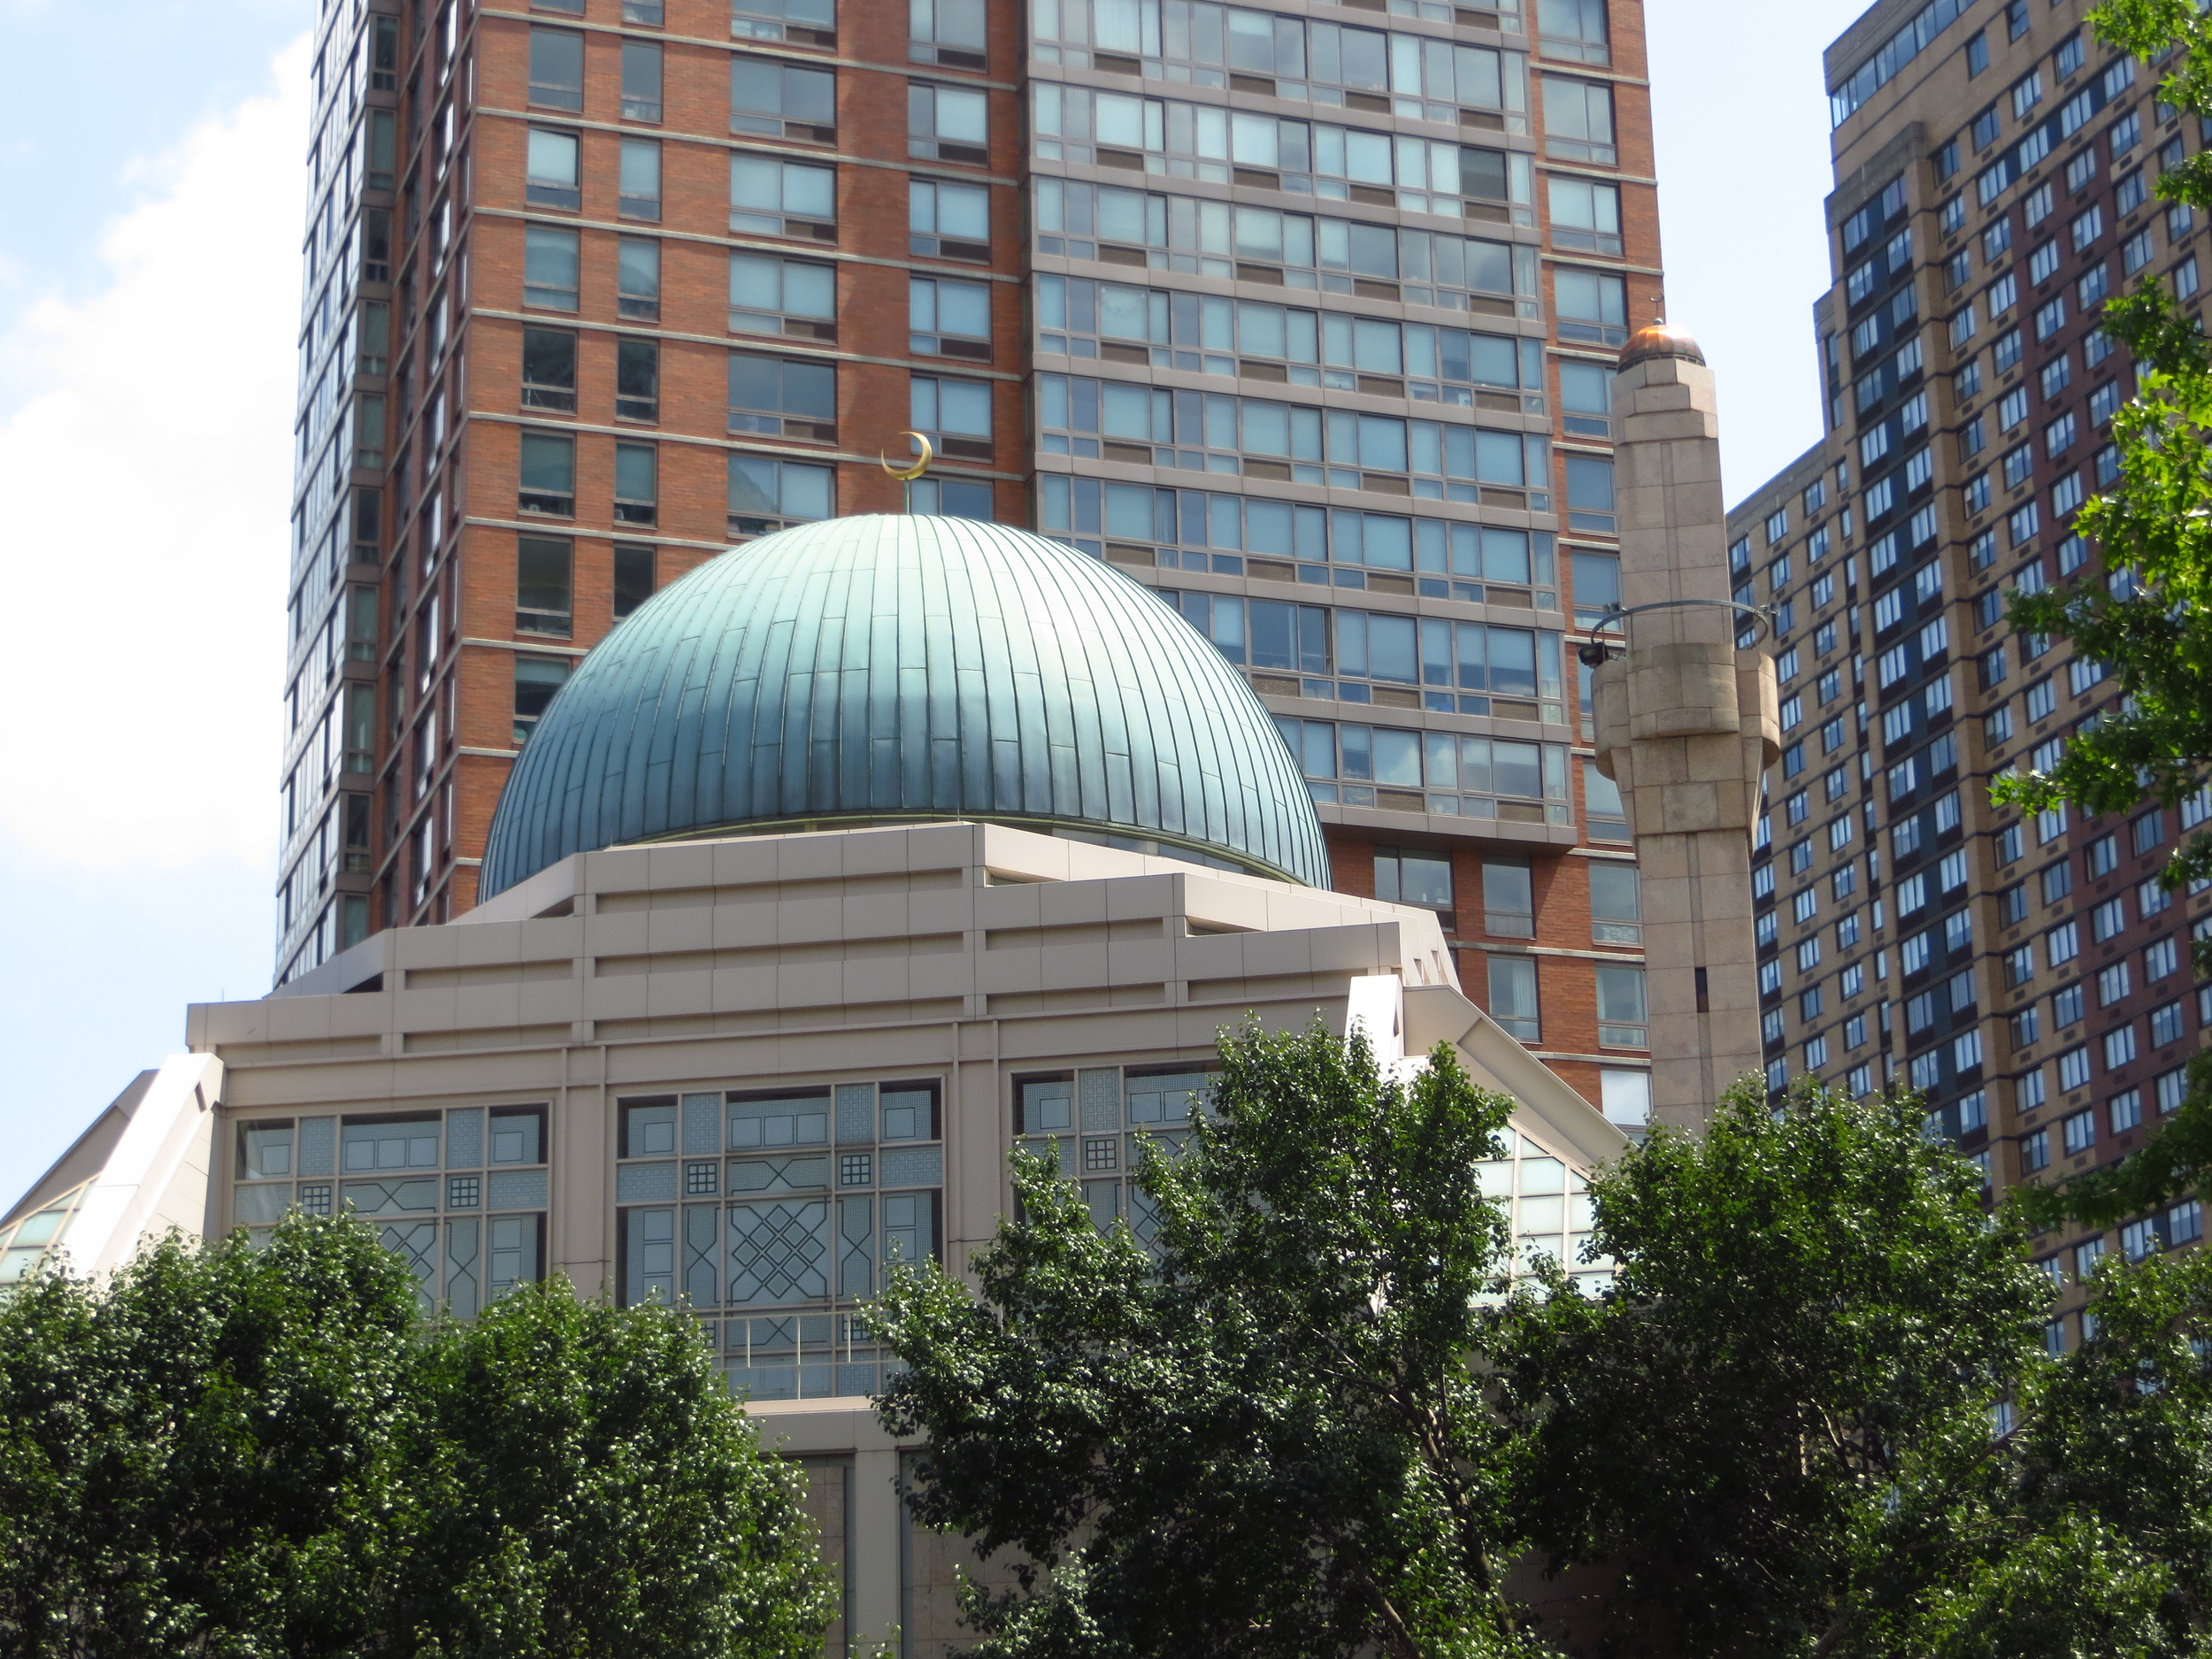 Islamic Cultural Center of NY